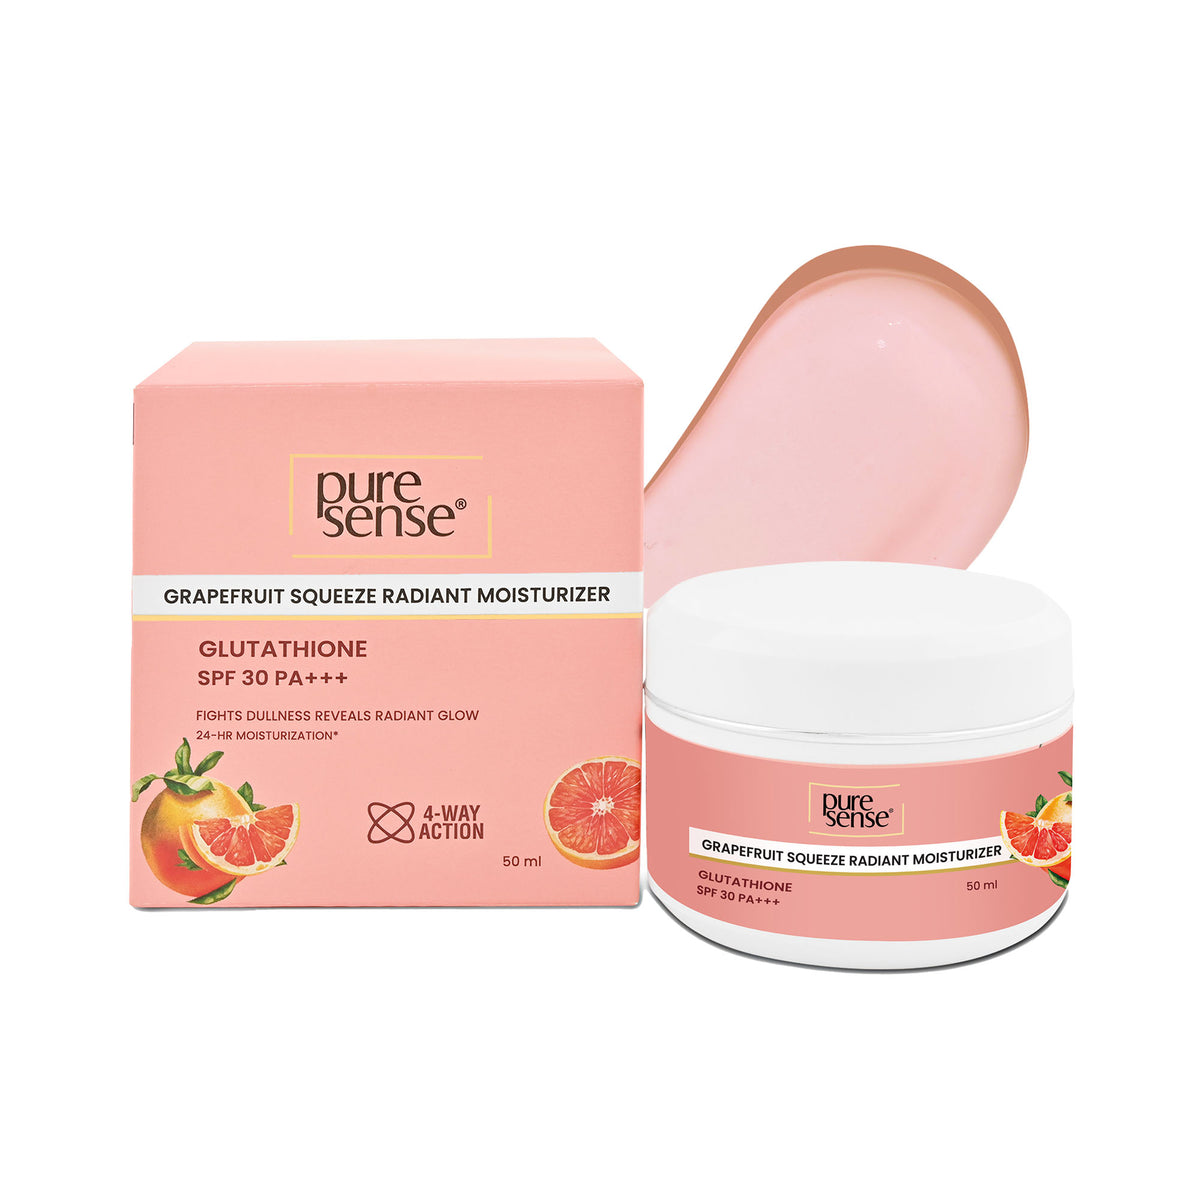 PureSense Grapefruit Squeeze Radiant Moisturizer - 50ml